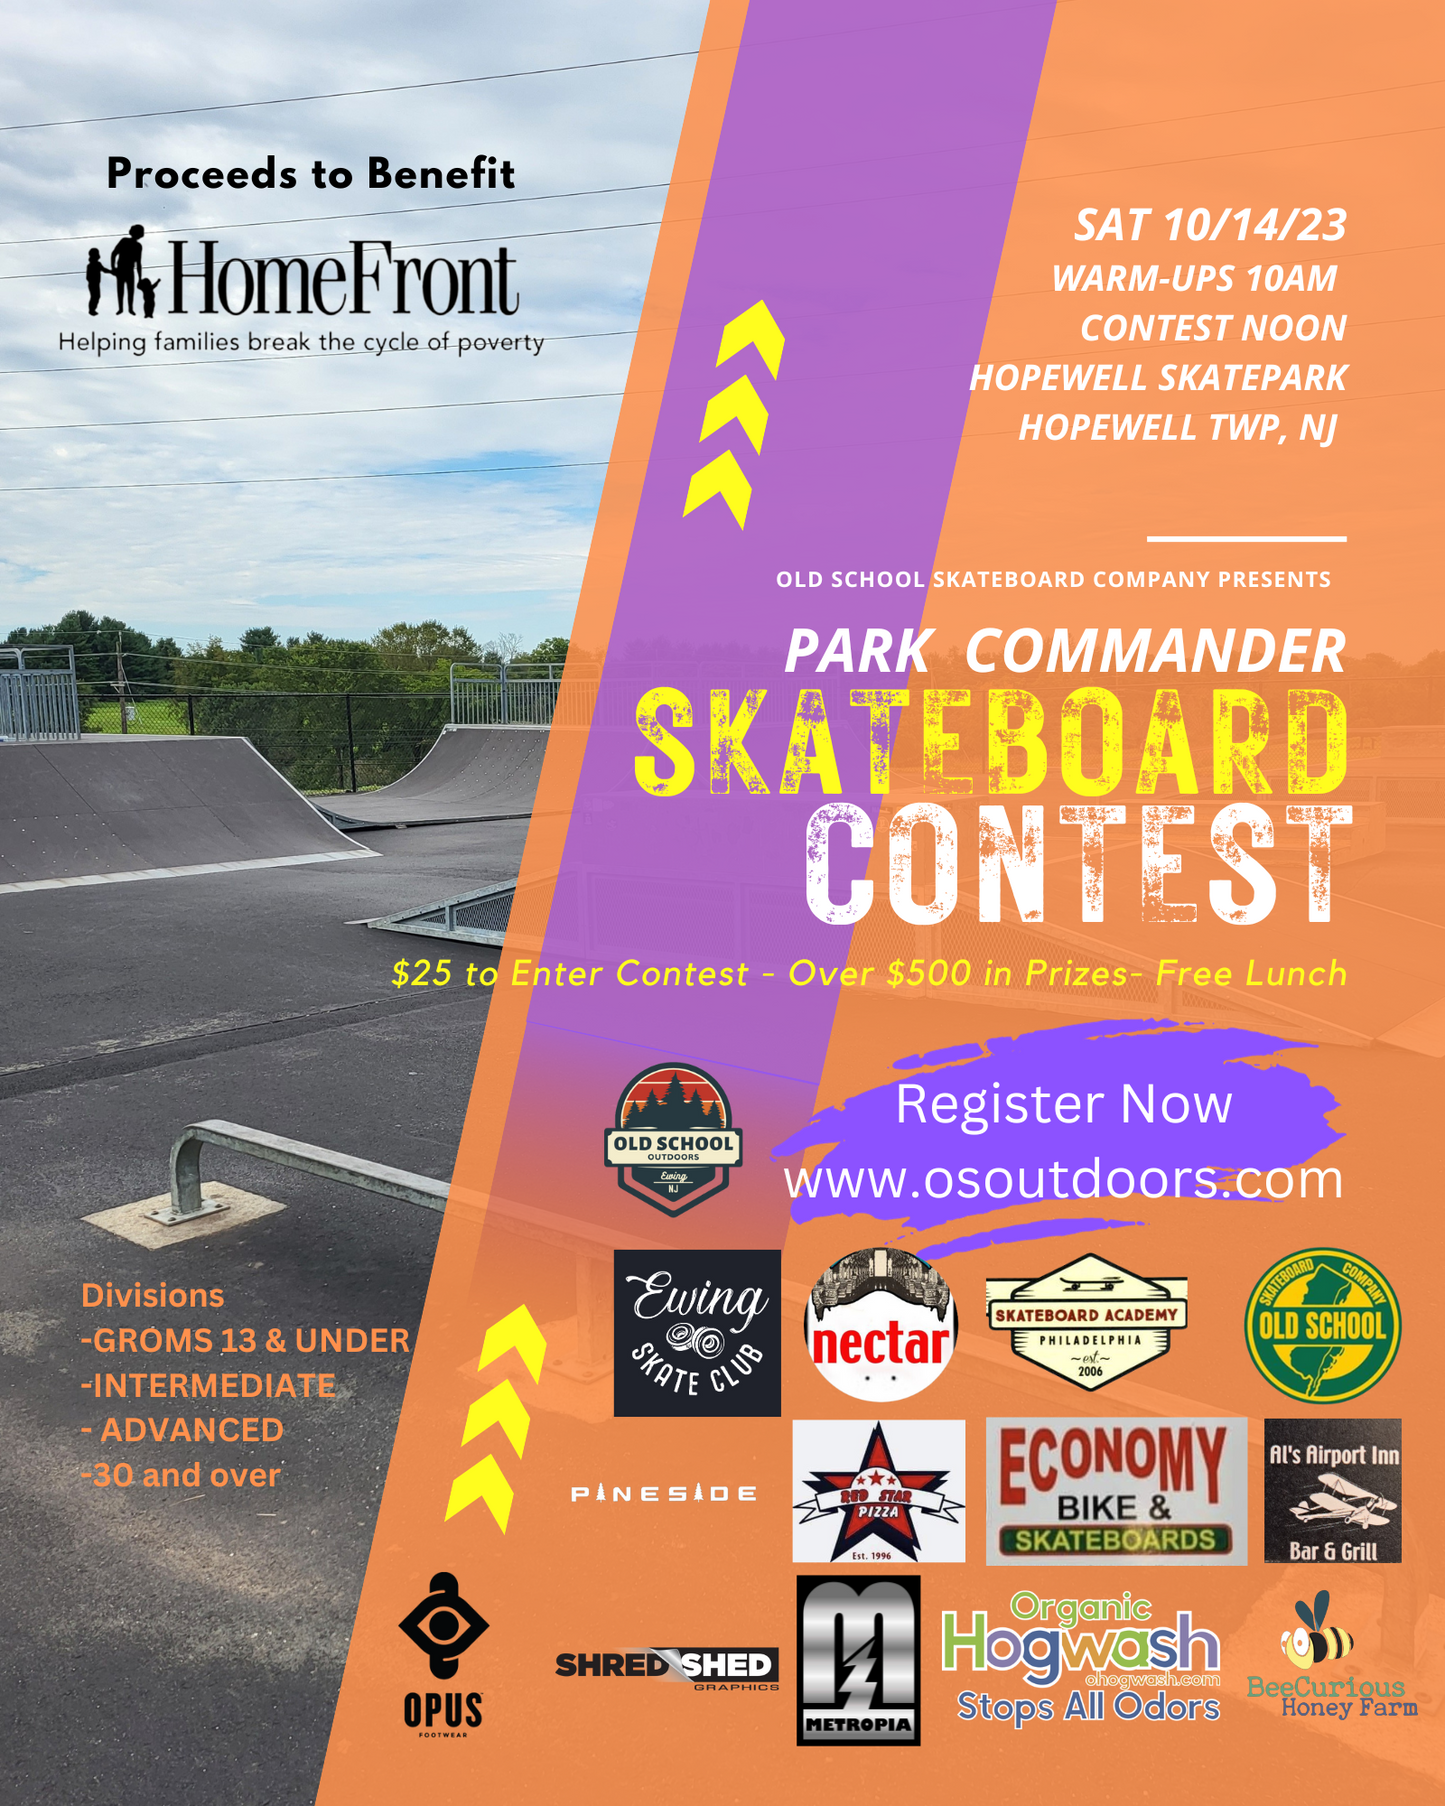 Sponsor Park Commander Skateboard Contest